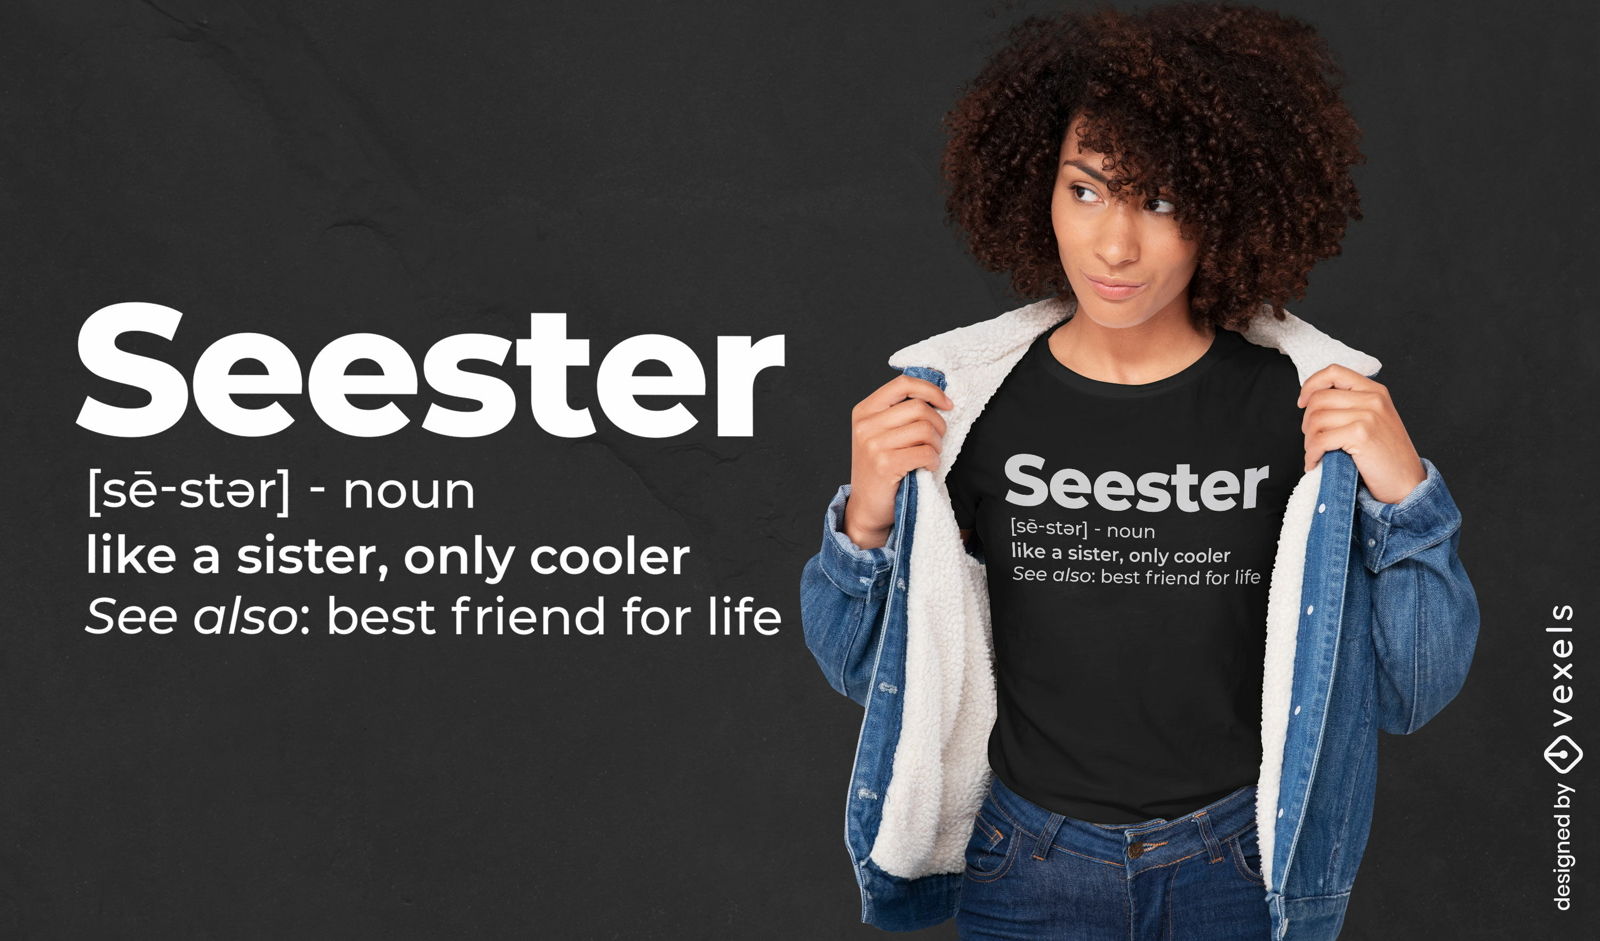 Dise?o de camiseta de definici?n de mejor amigo de Seester